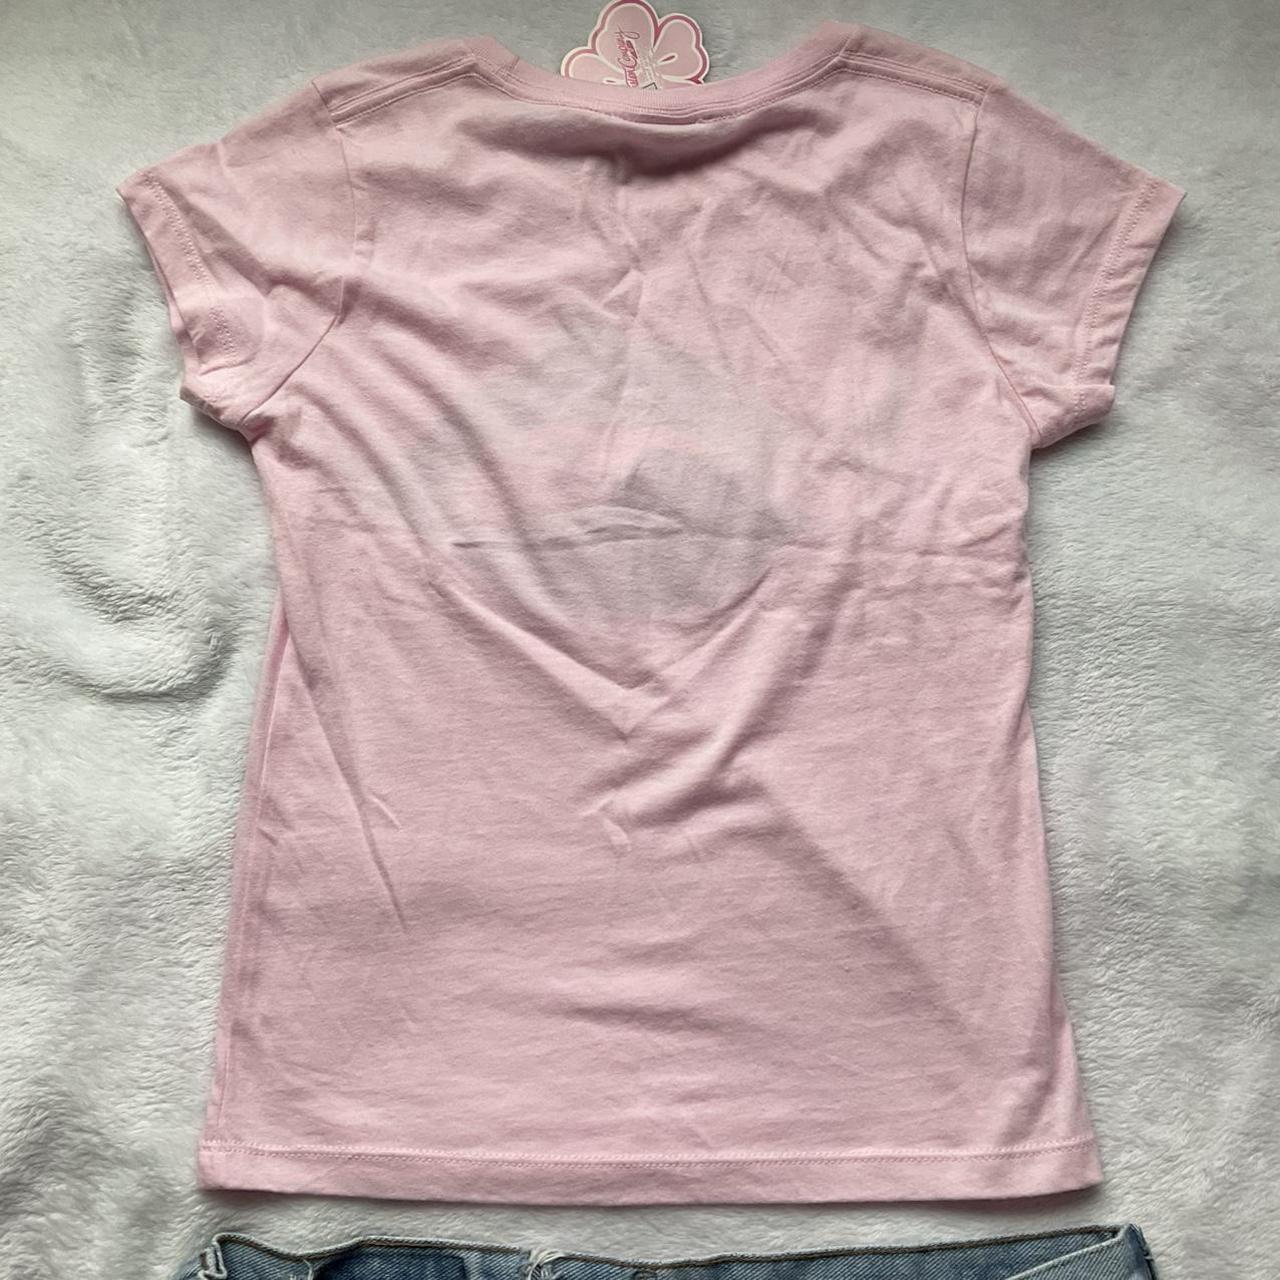 Sanrio Women's Pink T-shirt (3)